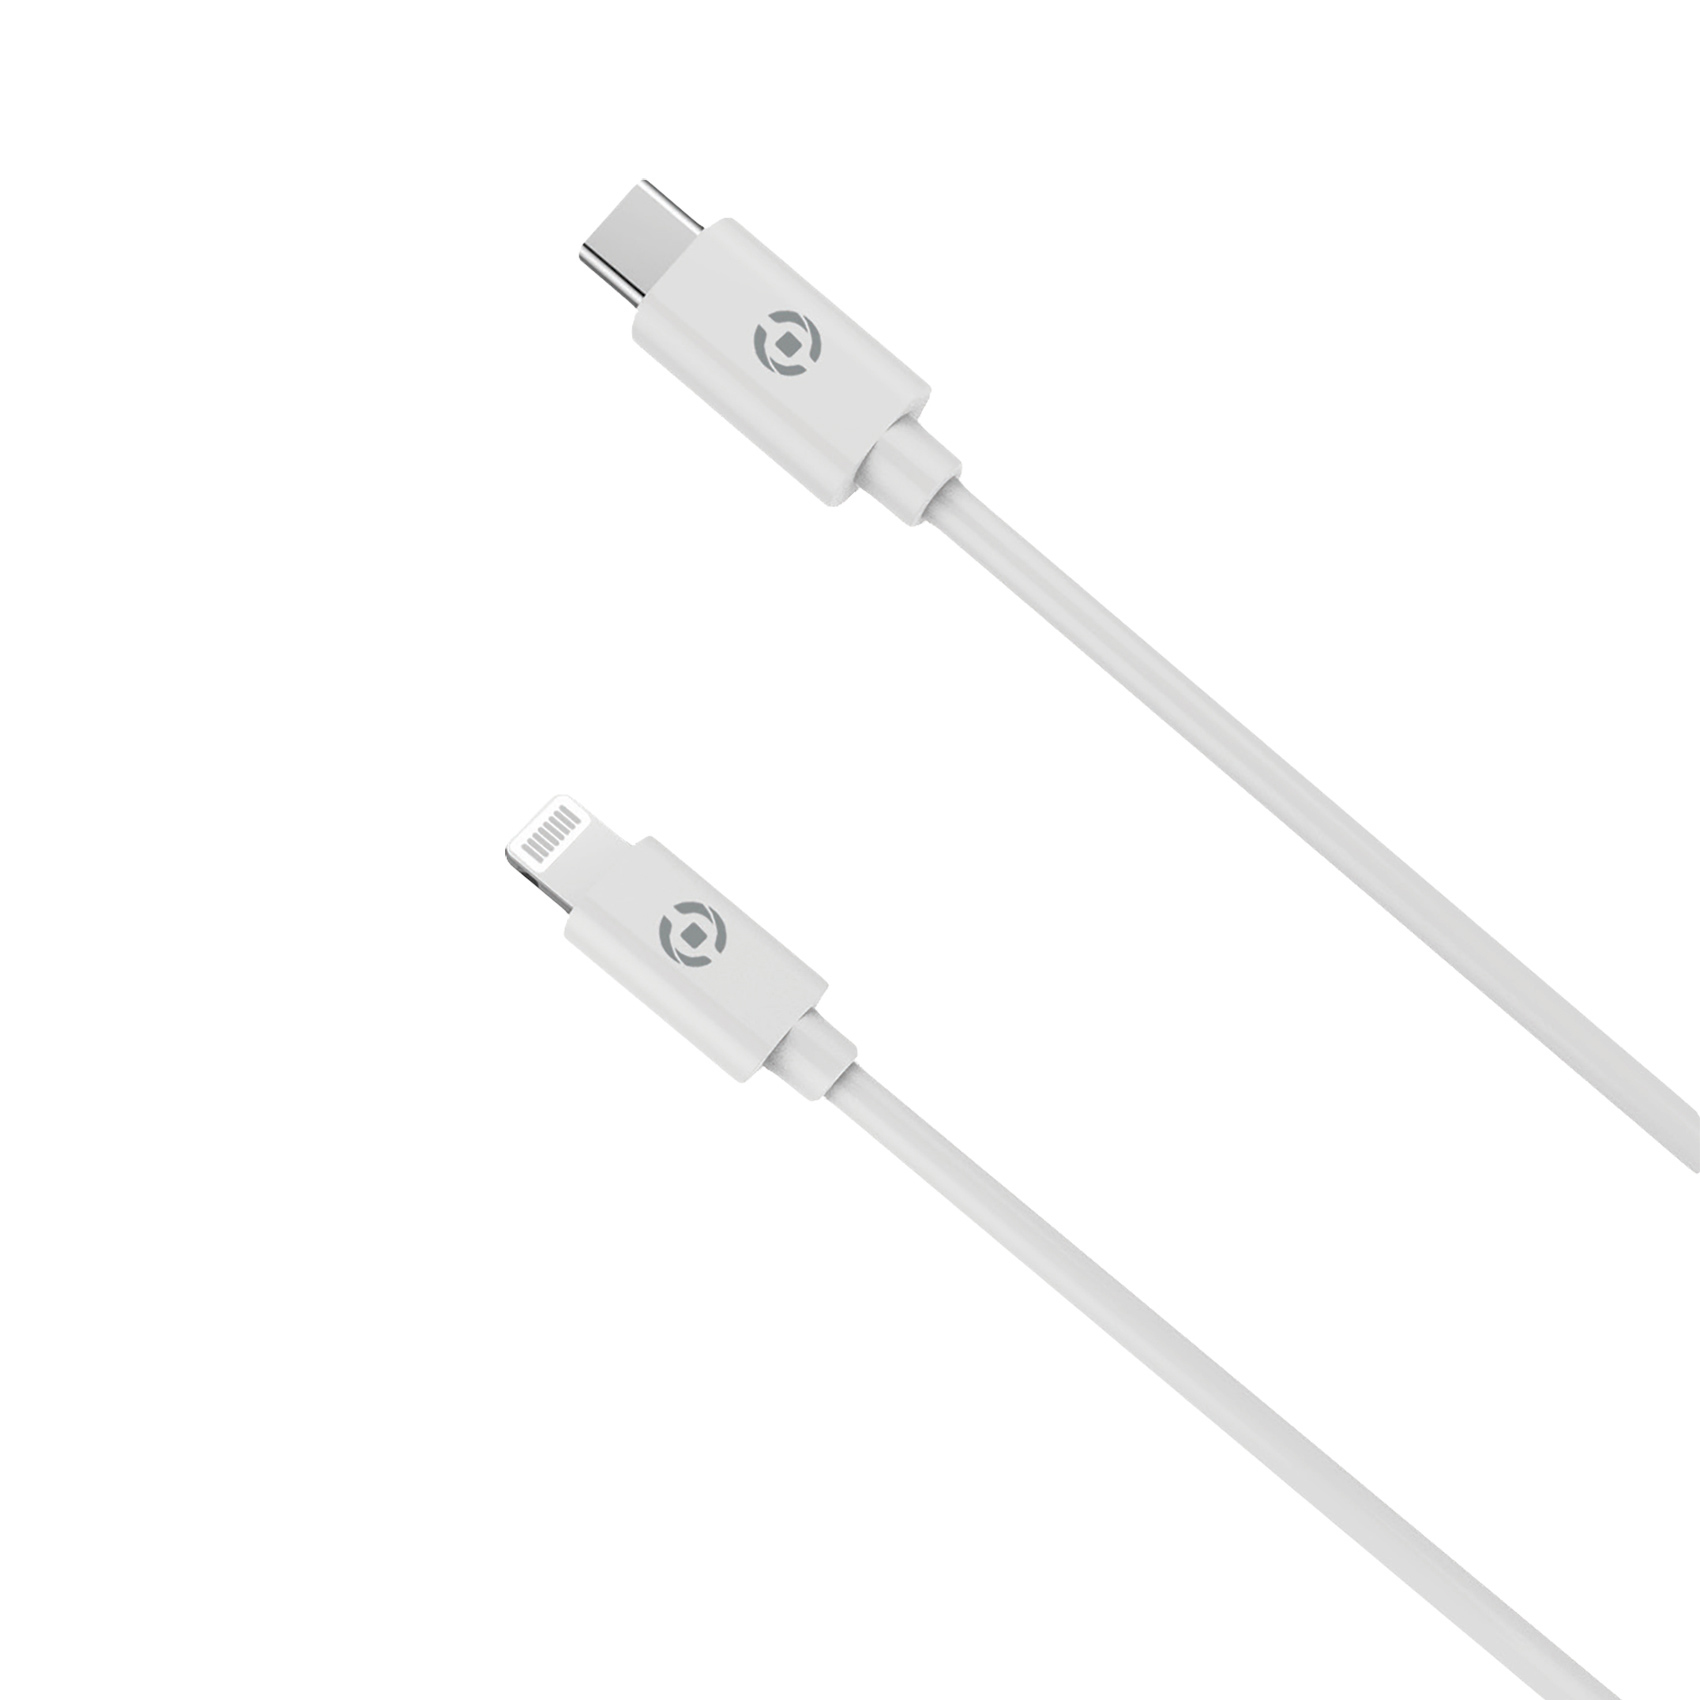 CELLY USB-C - LIGHTNING kabl za iPhone u BELOJ boji slika 1